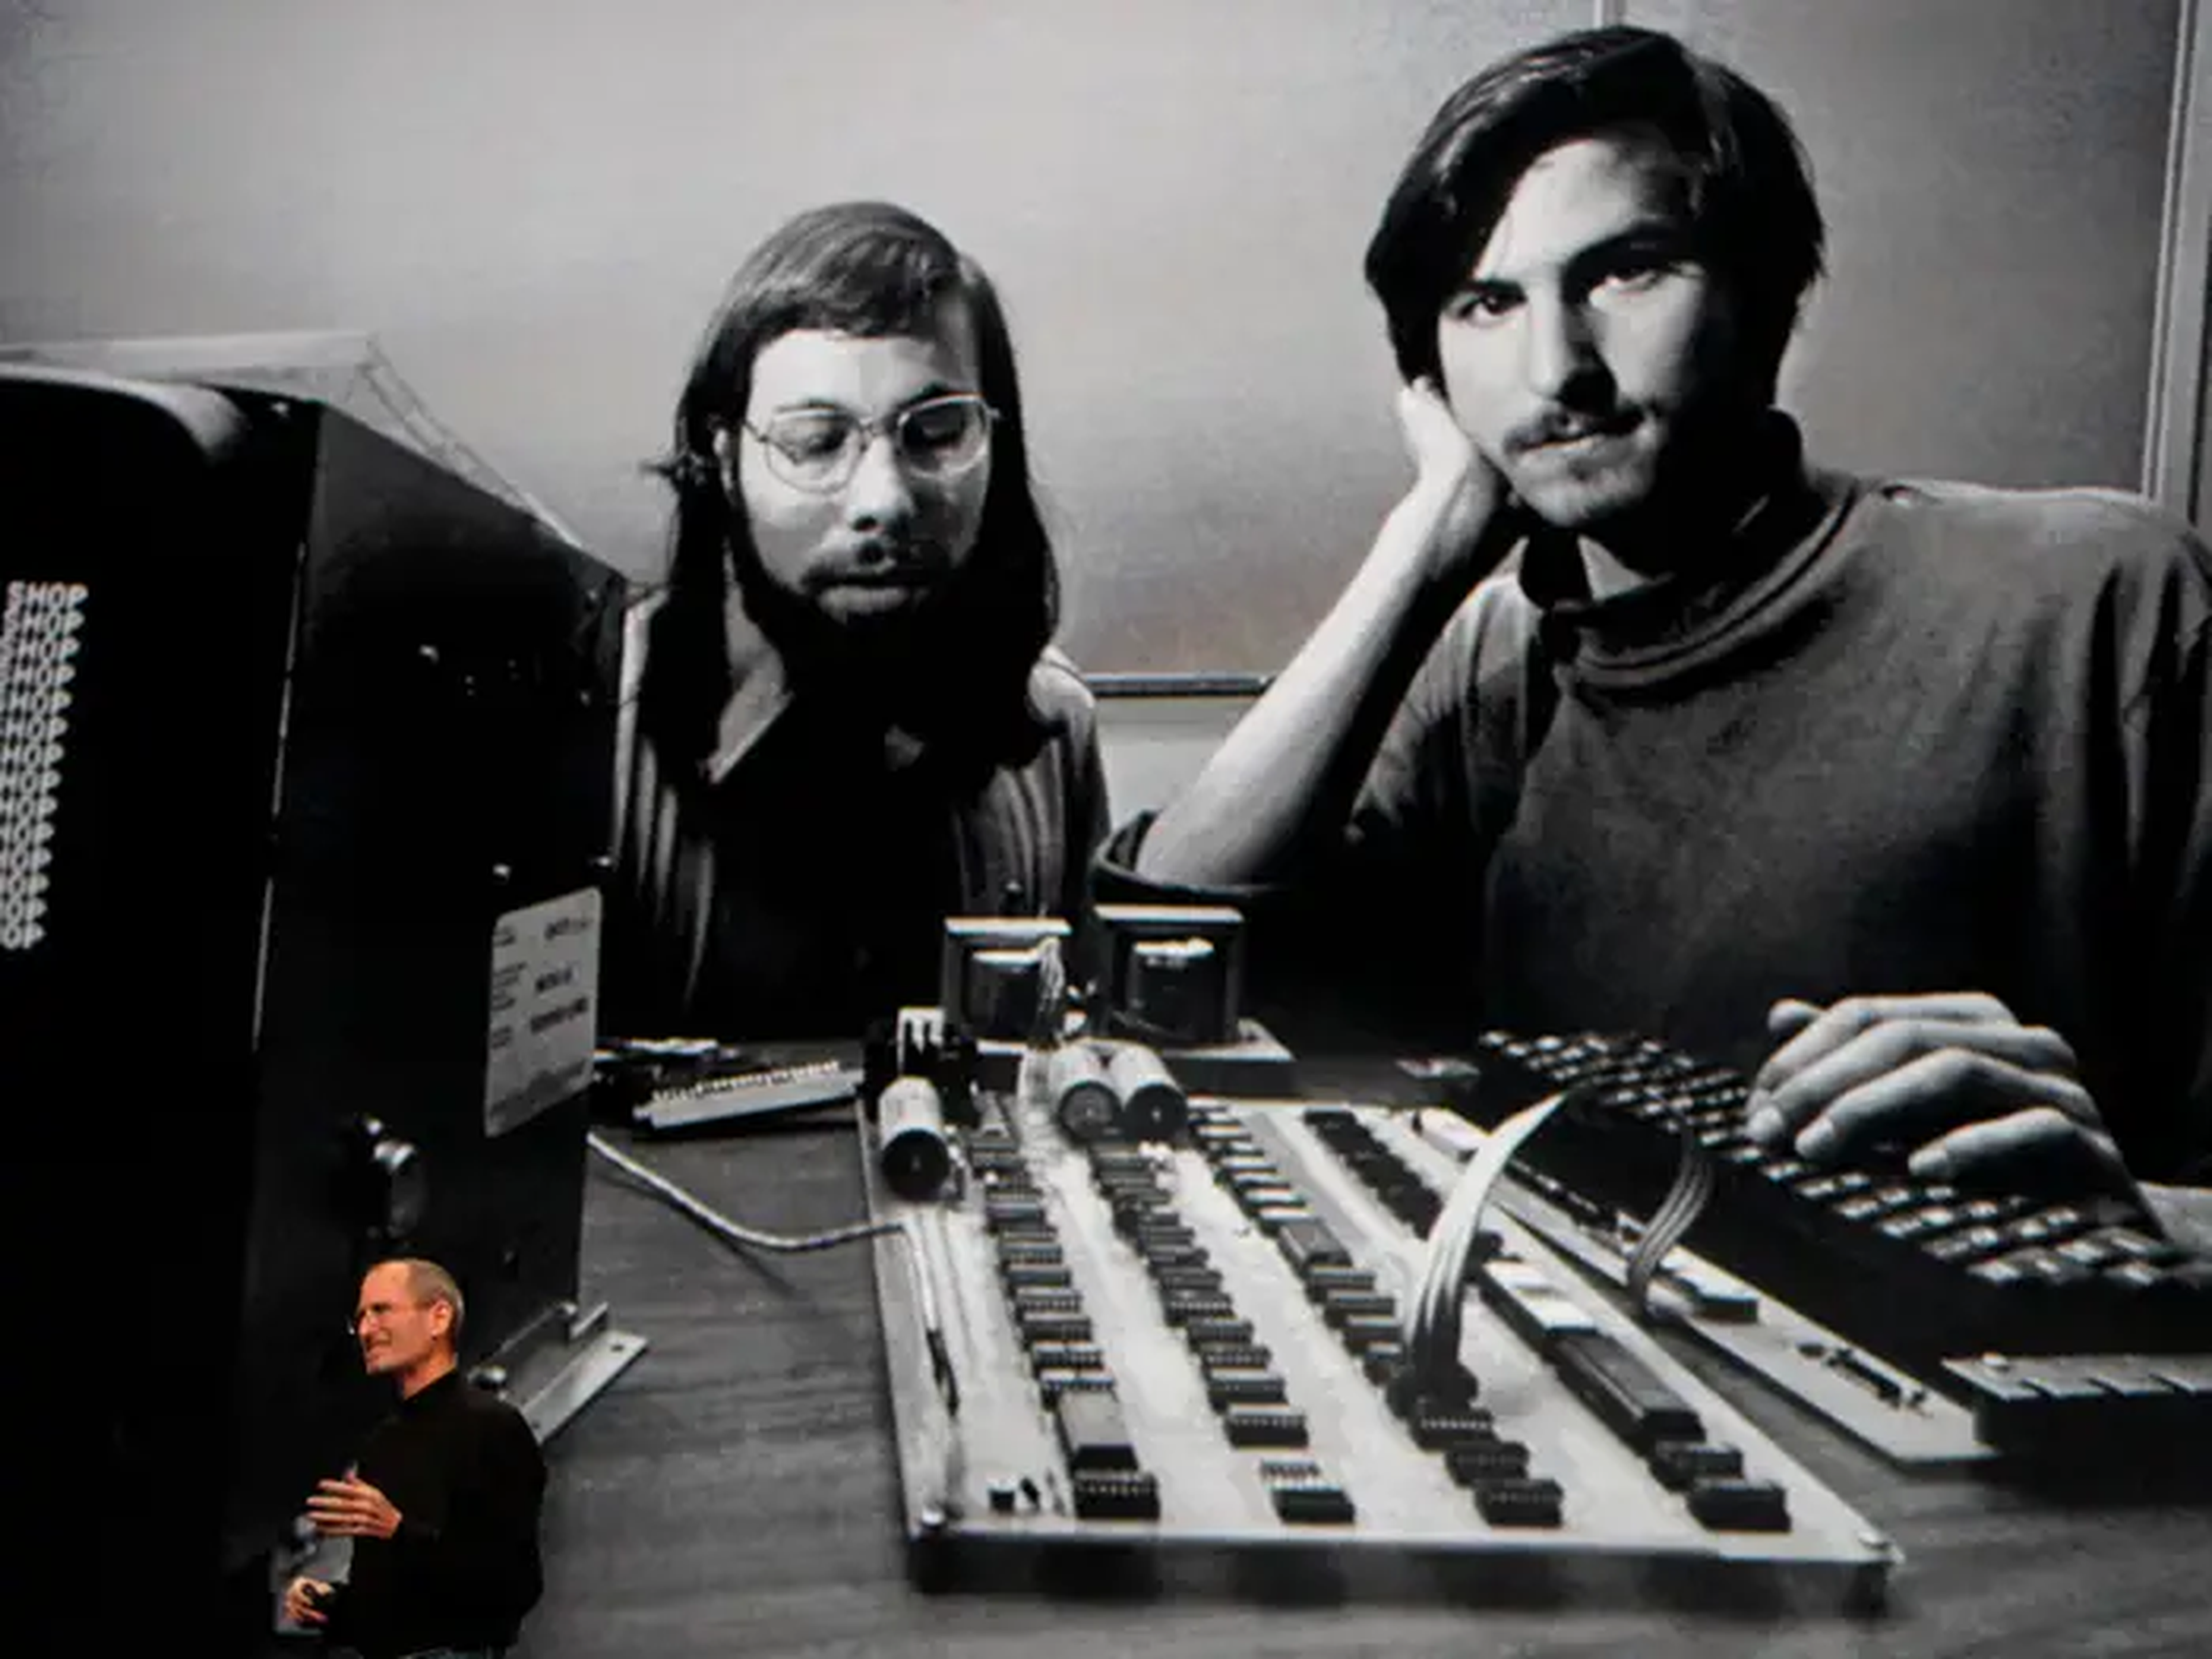 Isaacson ha afirmado que Steve Jobs (derecha) asumió el papel de "macho alfa" en Apple y "marginó" a su cofundador Steve Wozniak (izquierda).